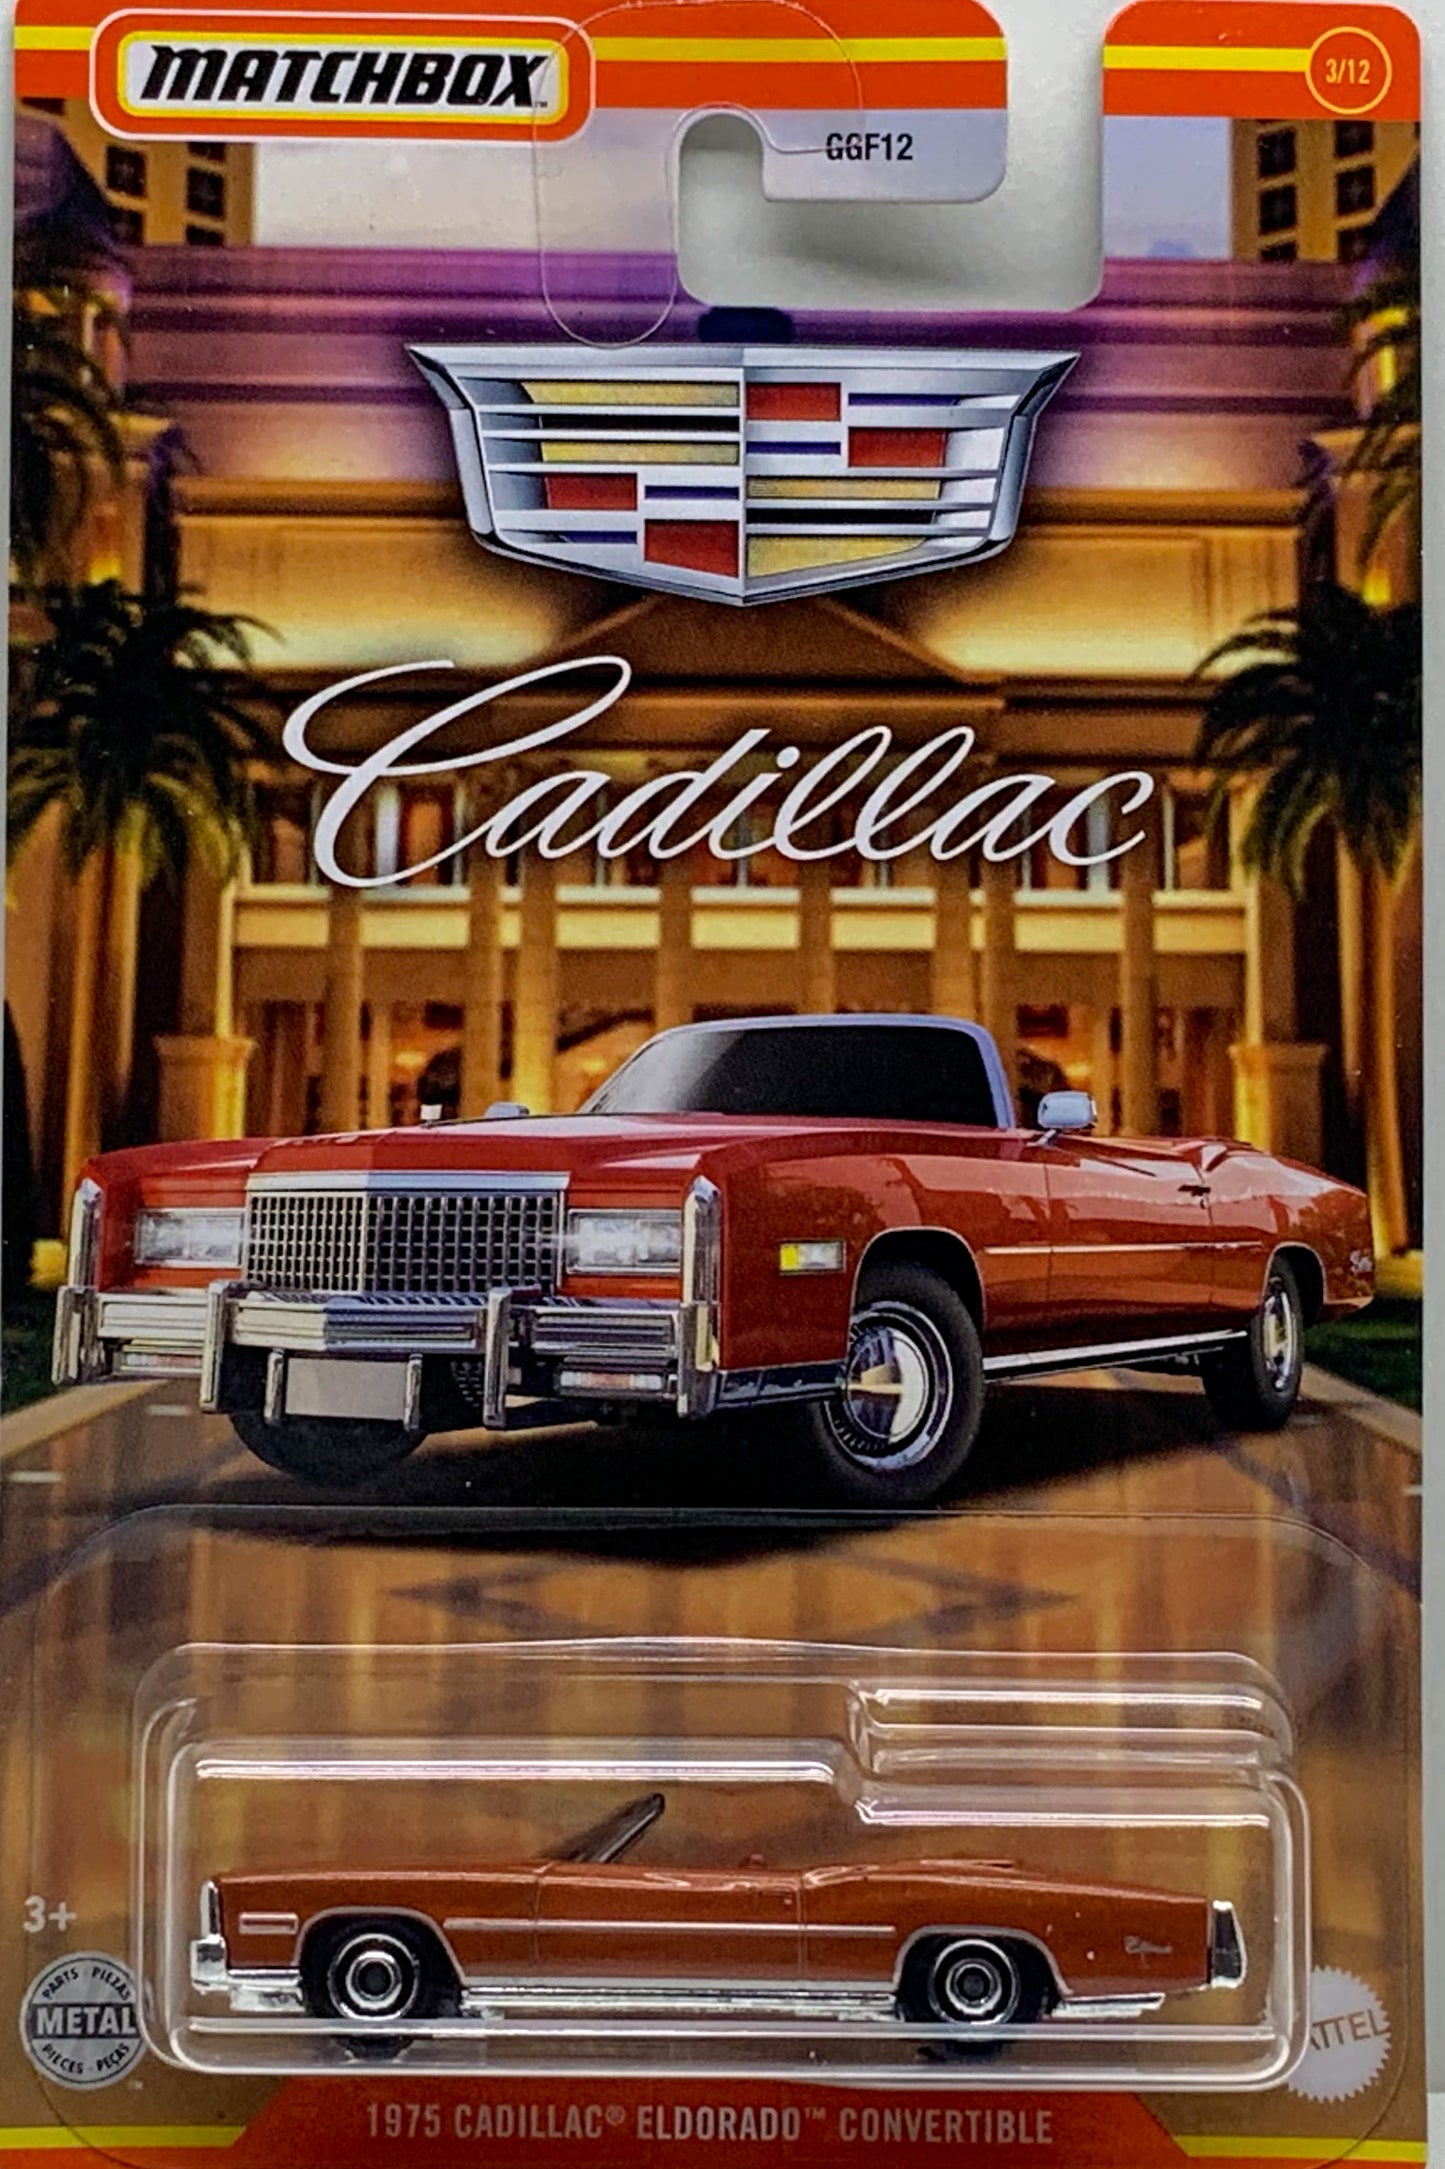 Buy at Tatoy Matchbox Cadillac Series 1975 Cadillac Eldorado Convertible Number 3 from set of 12 Mattel GGF12